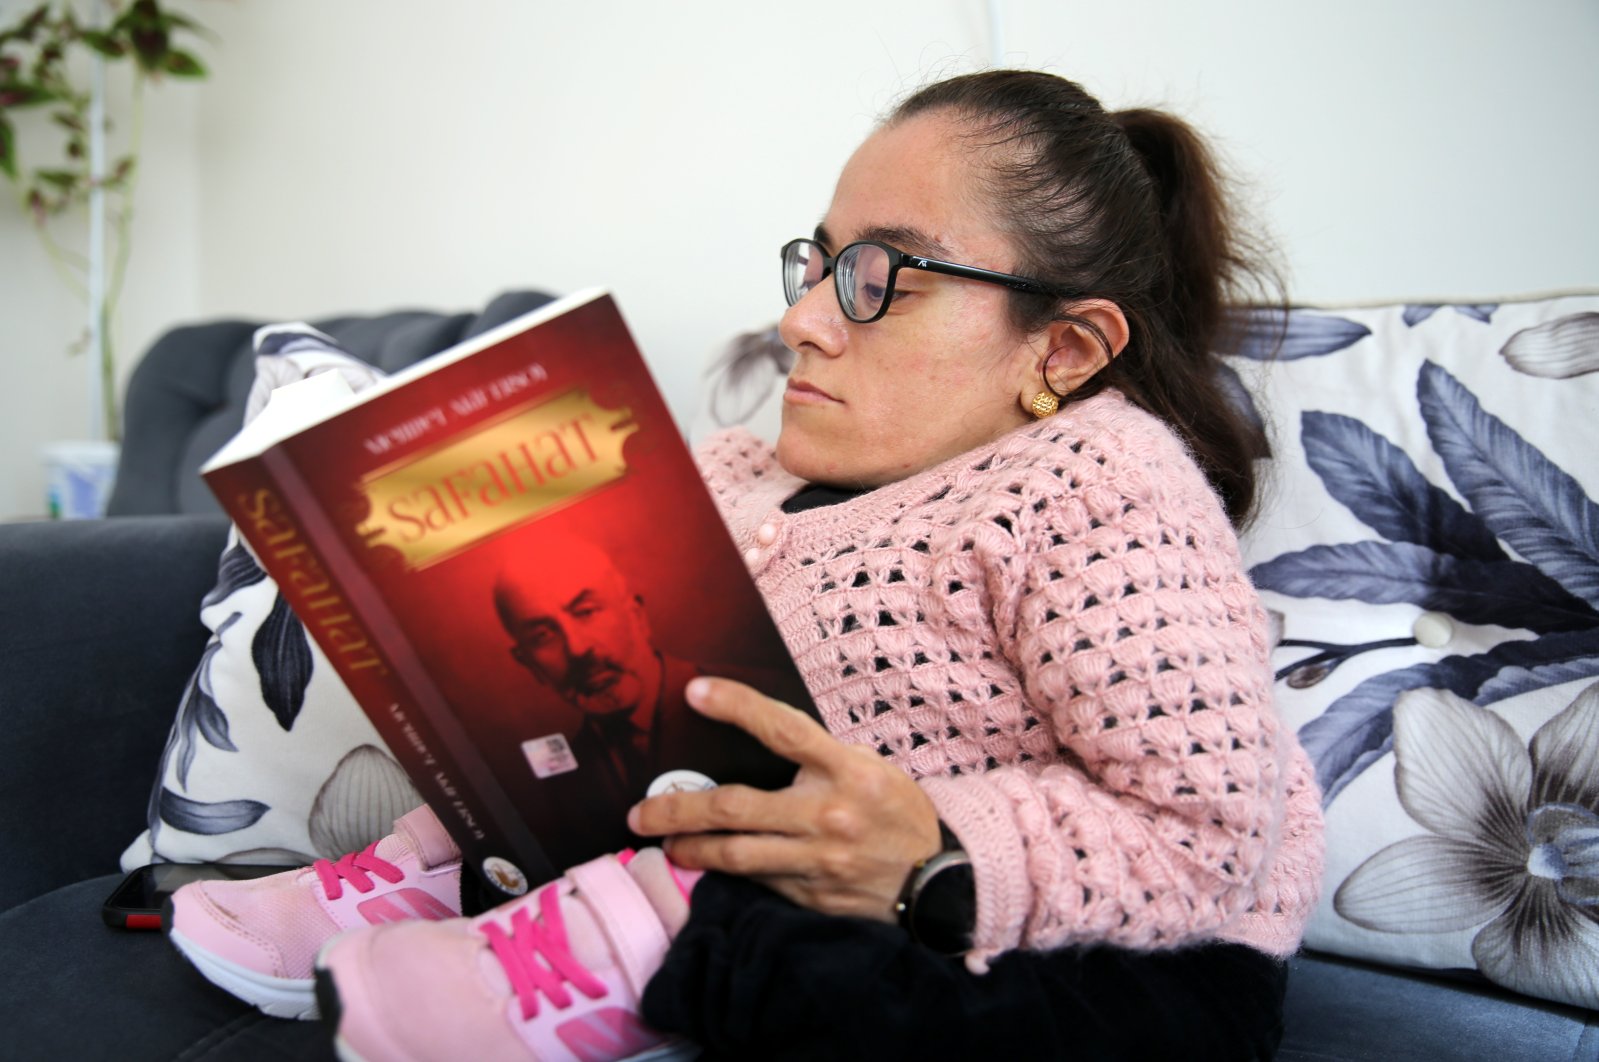 Tuğba Fidan, who has brittle bone disease, spends most of her time reading books, Sivas, Turkey, Nov. 16, 2021. (AA photo)